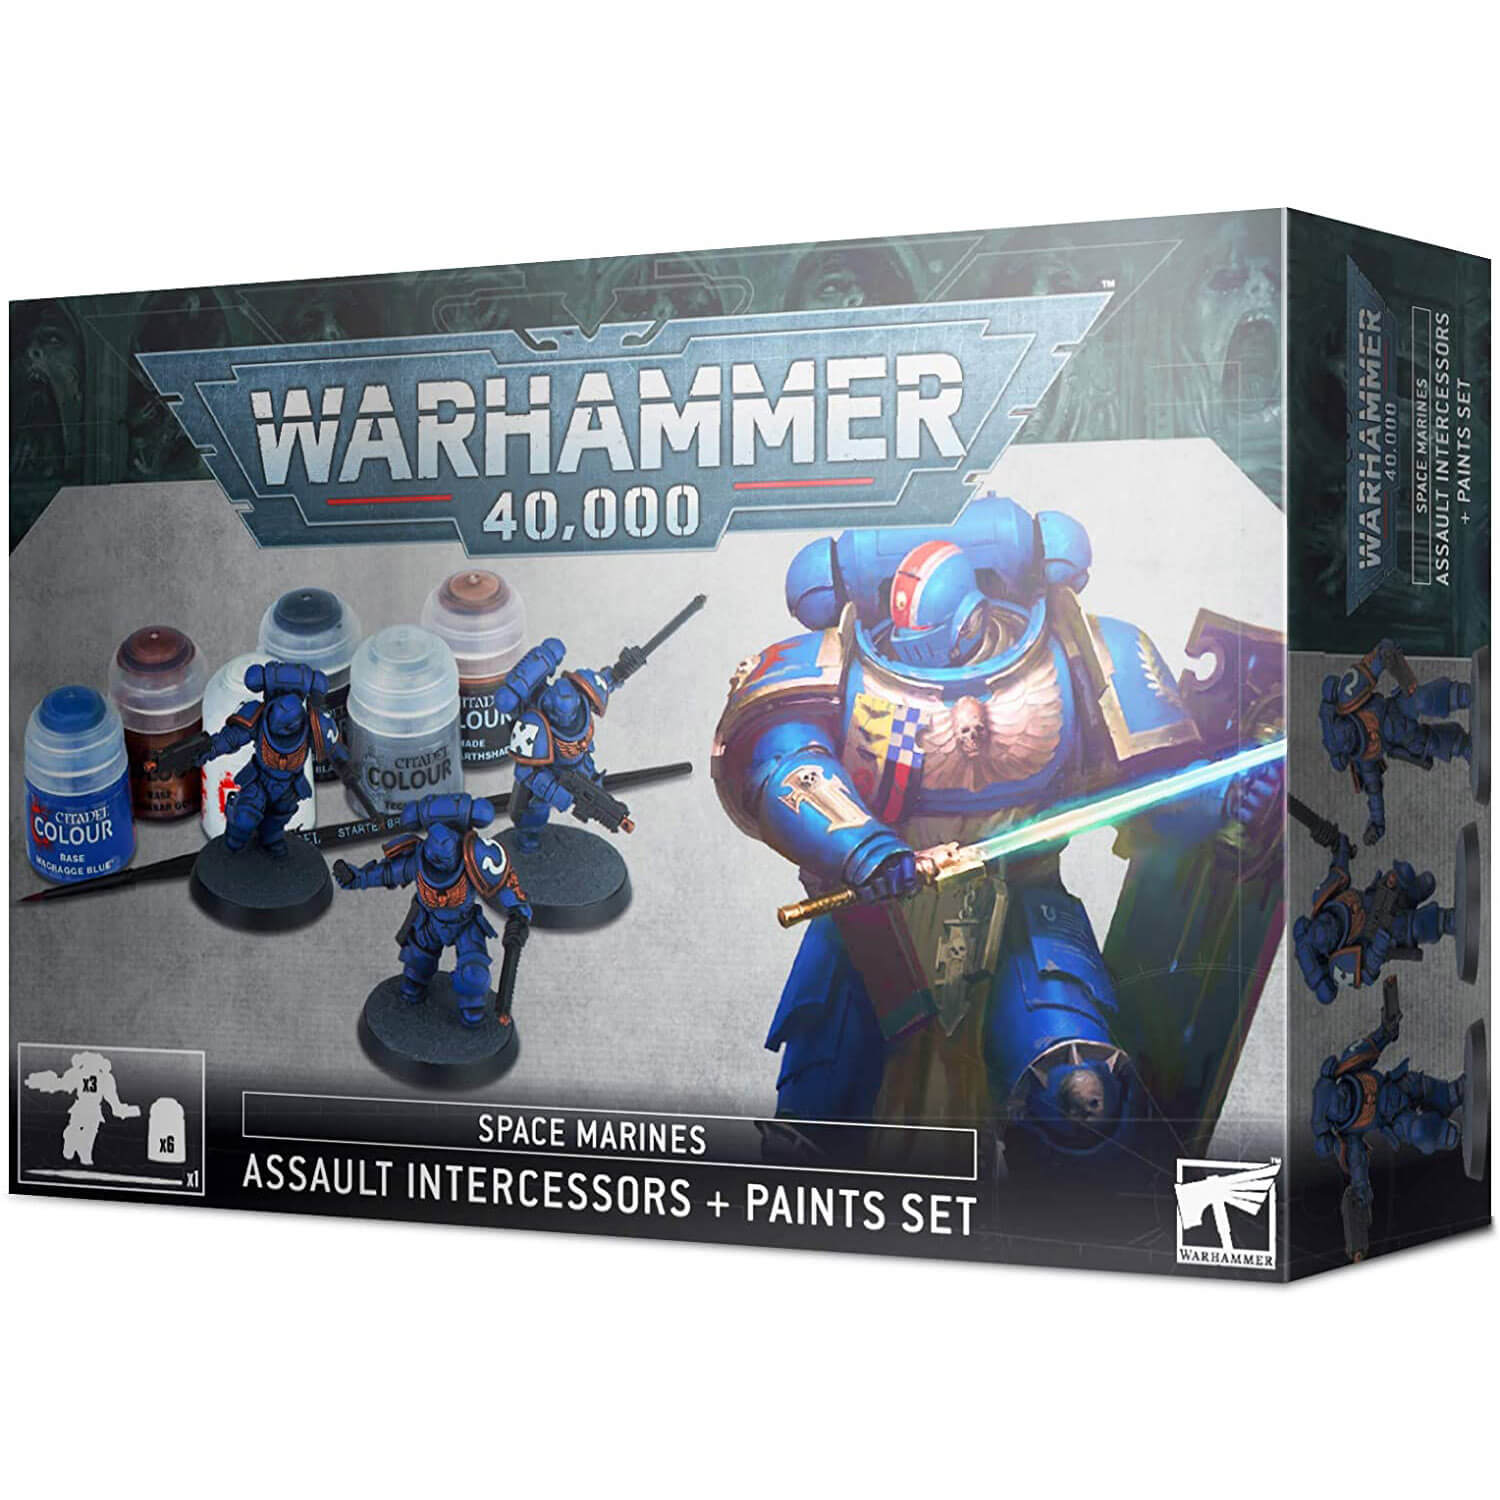 Warhammer 40,000 Space Marines Assault Intercessors and Paint Set